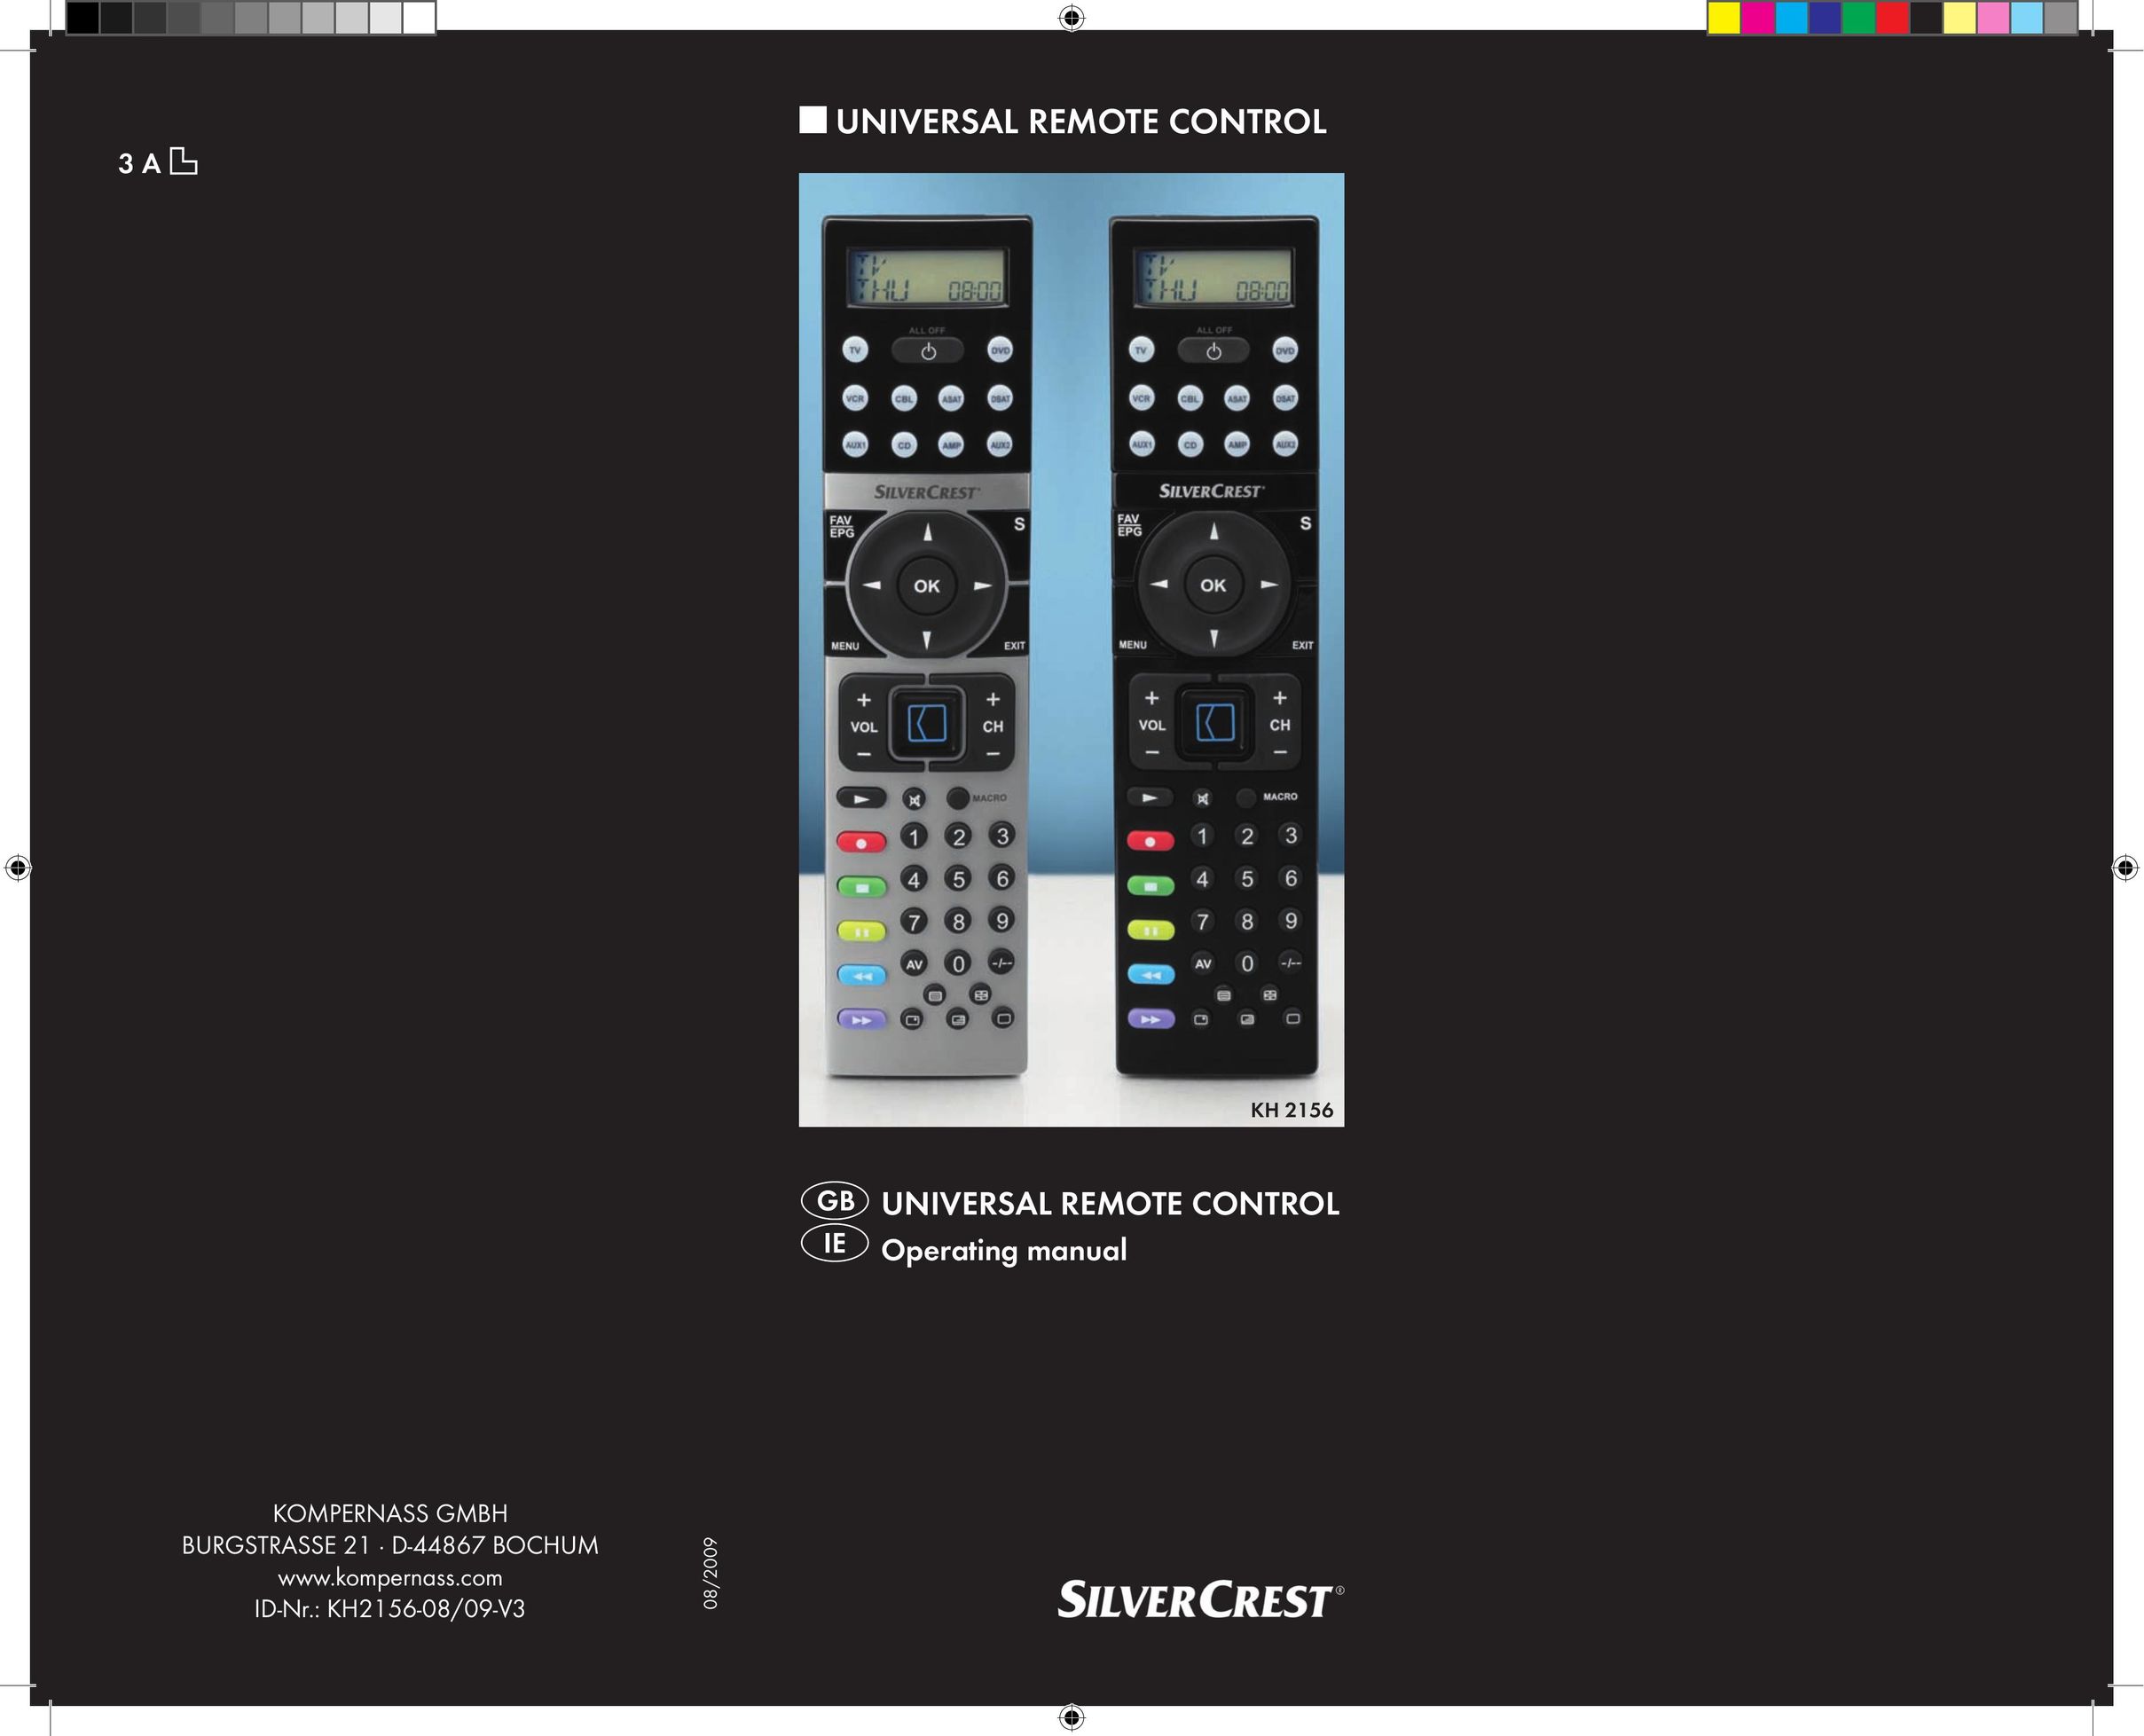 Kompernass KH 2156 Universal Remote User Manual